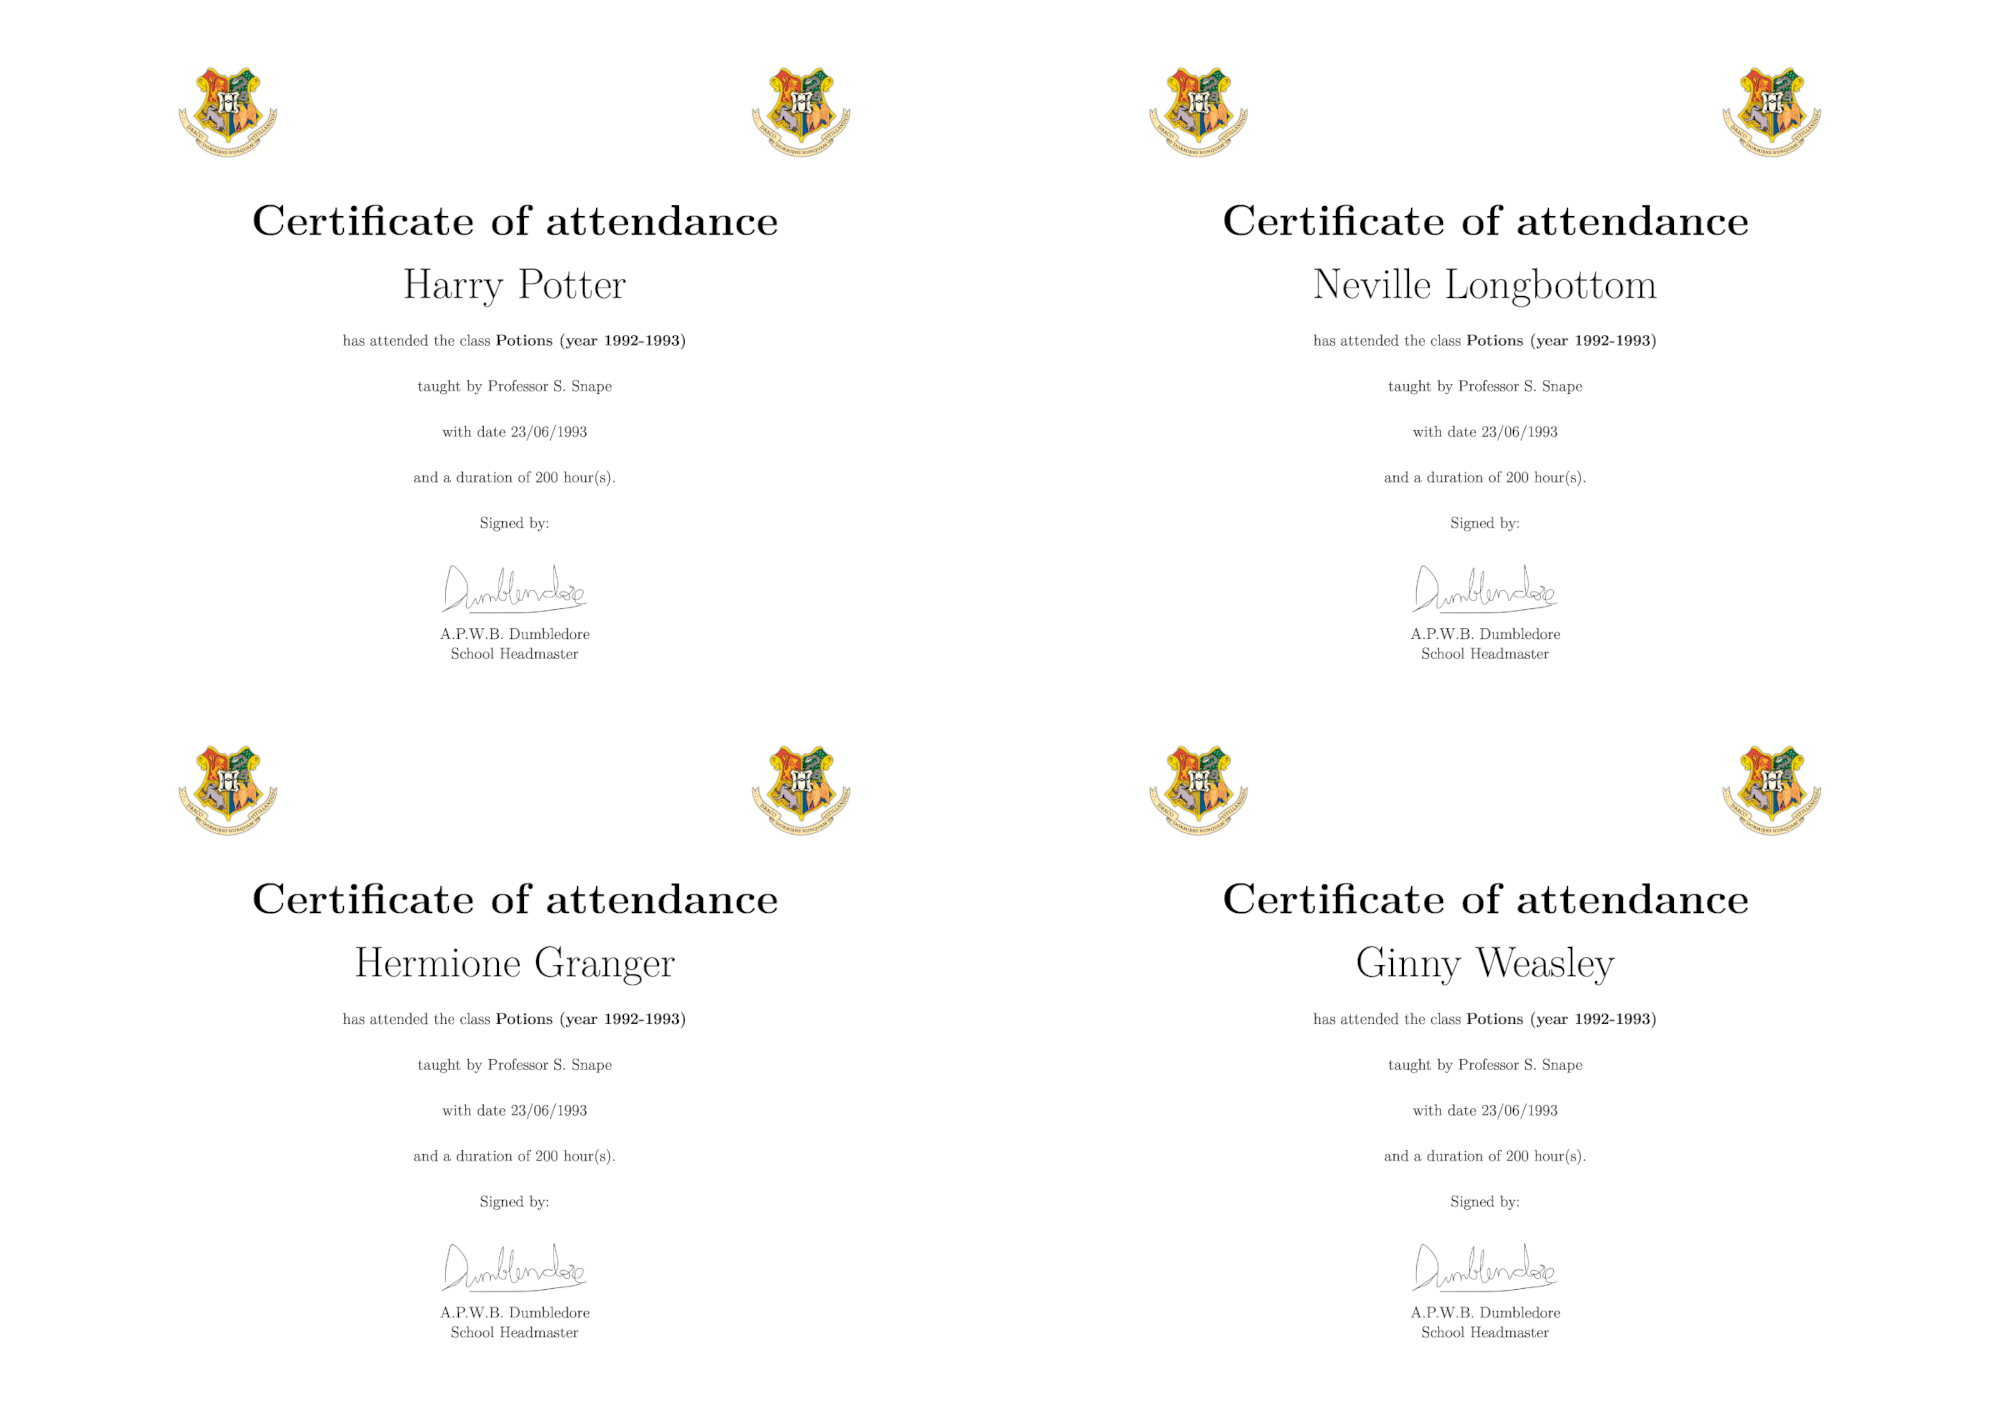 Attendance certificates